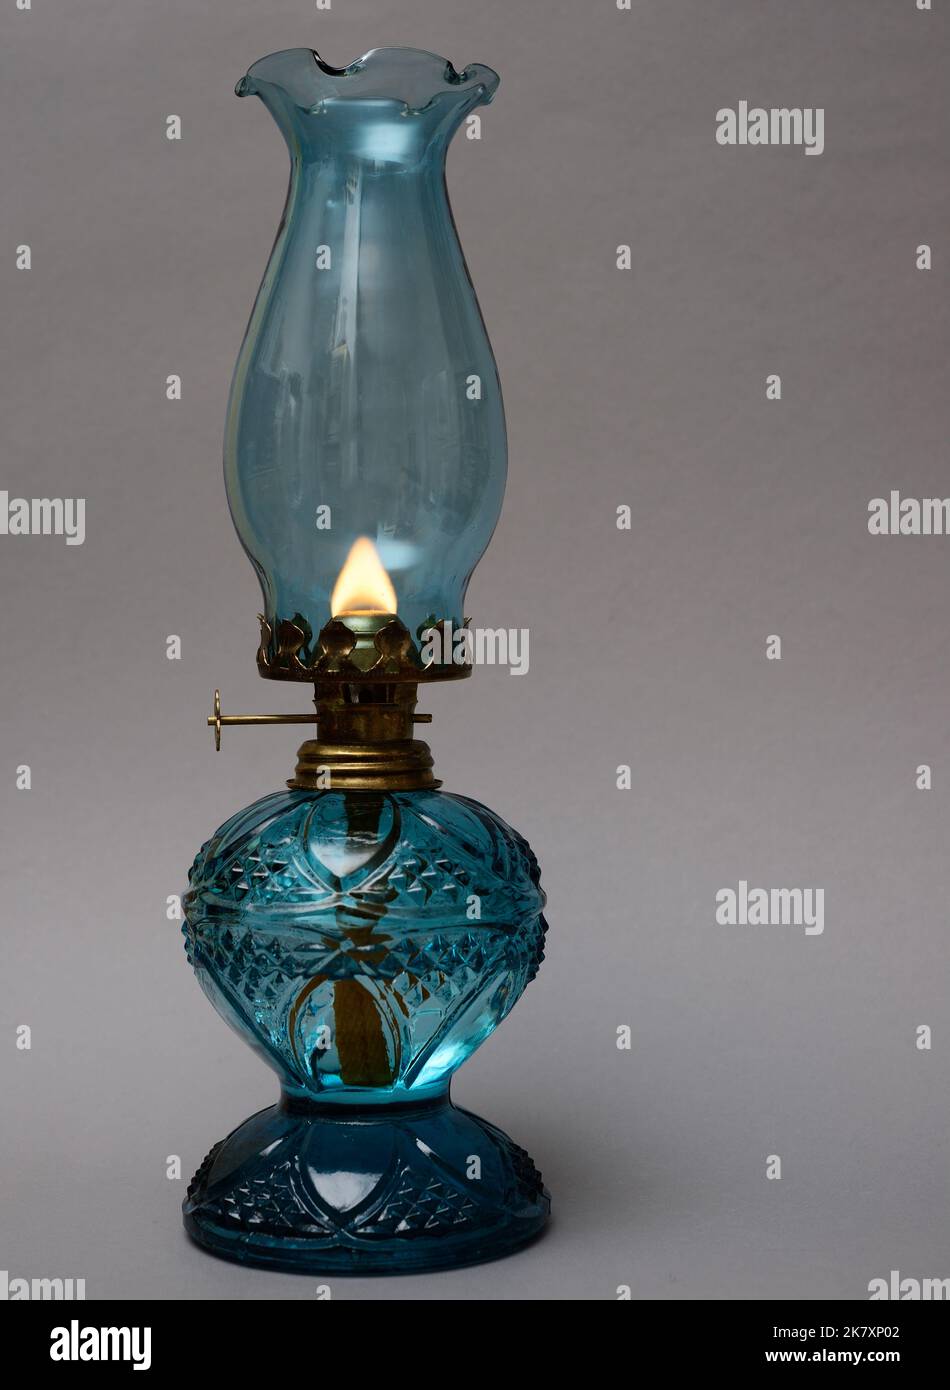 burning vintage oil lamp on neutral background Stock Photo